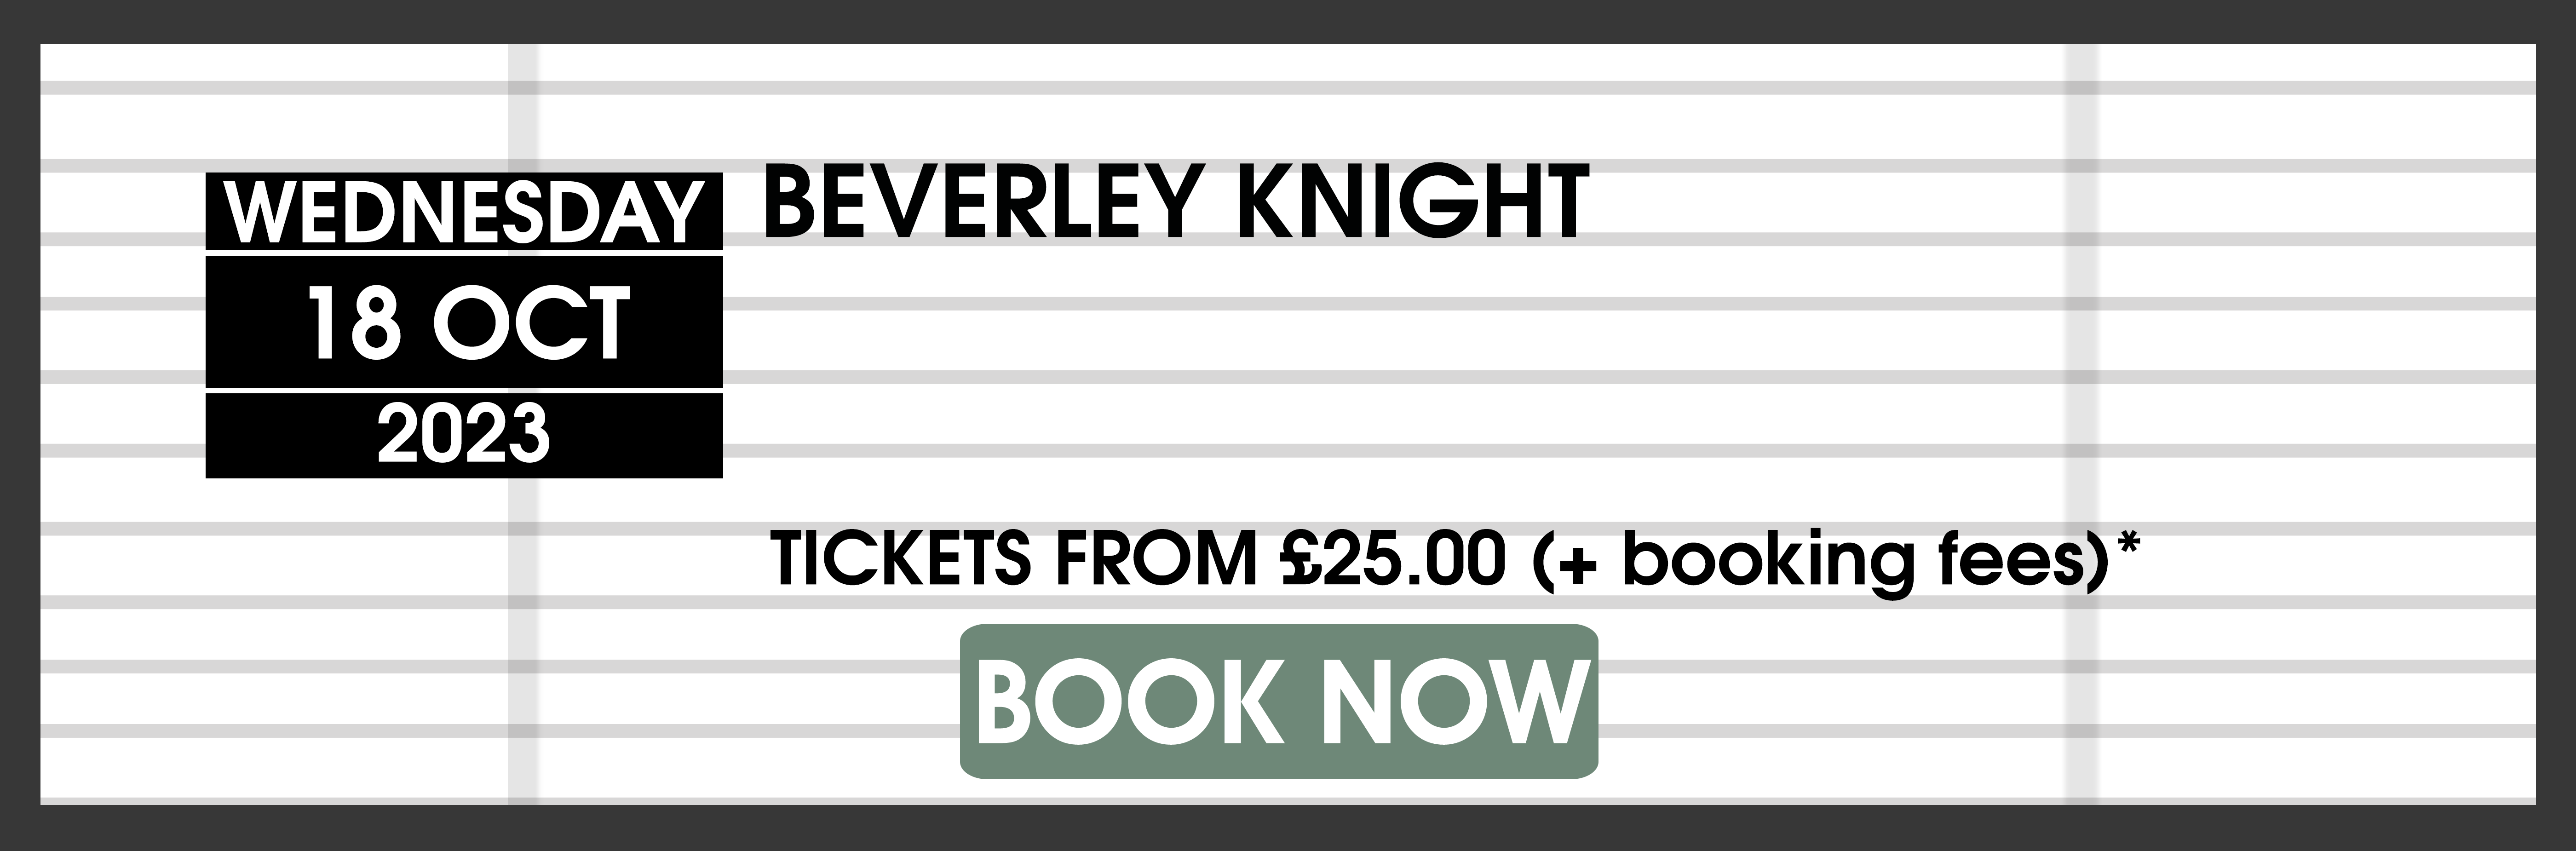 23.10.18 Beverley Knight BOOK 